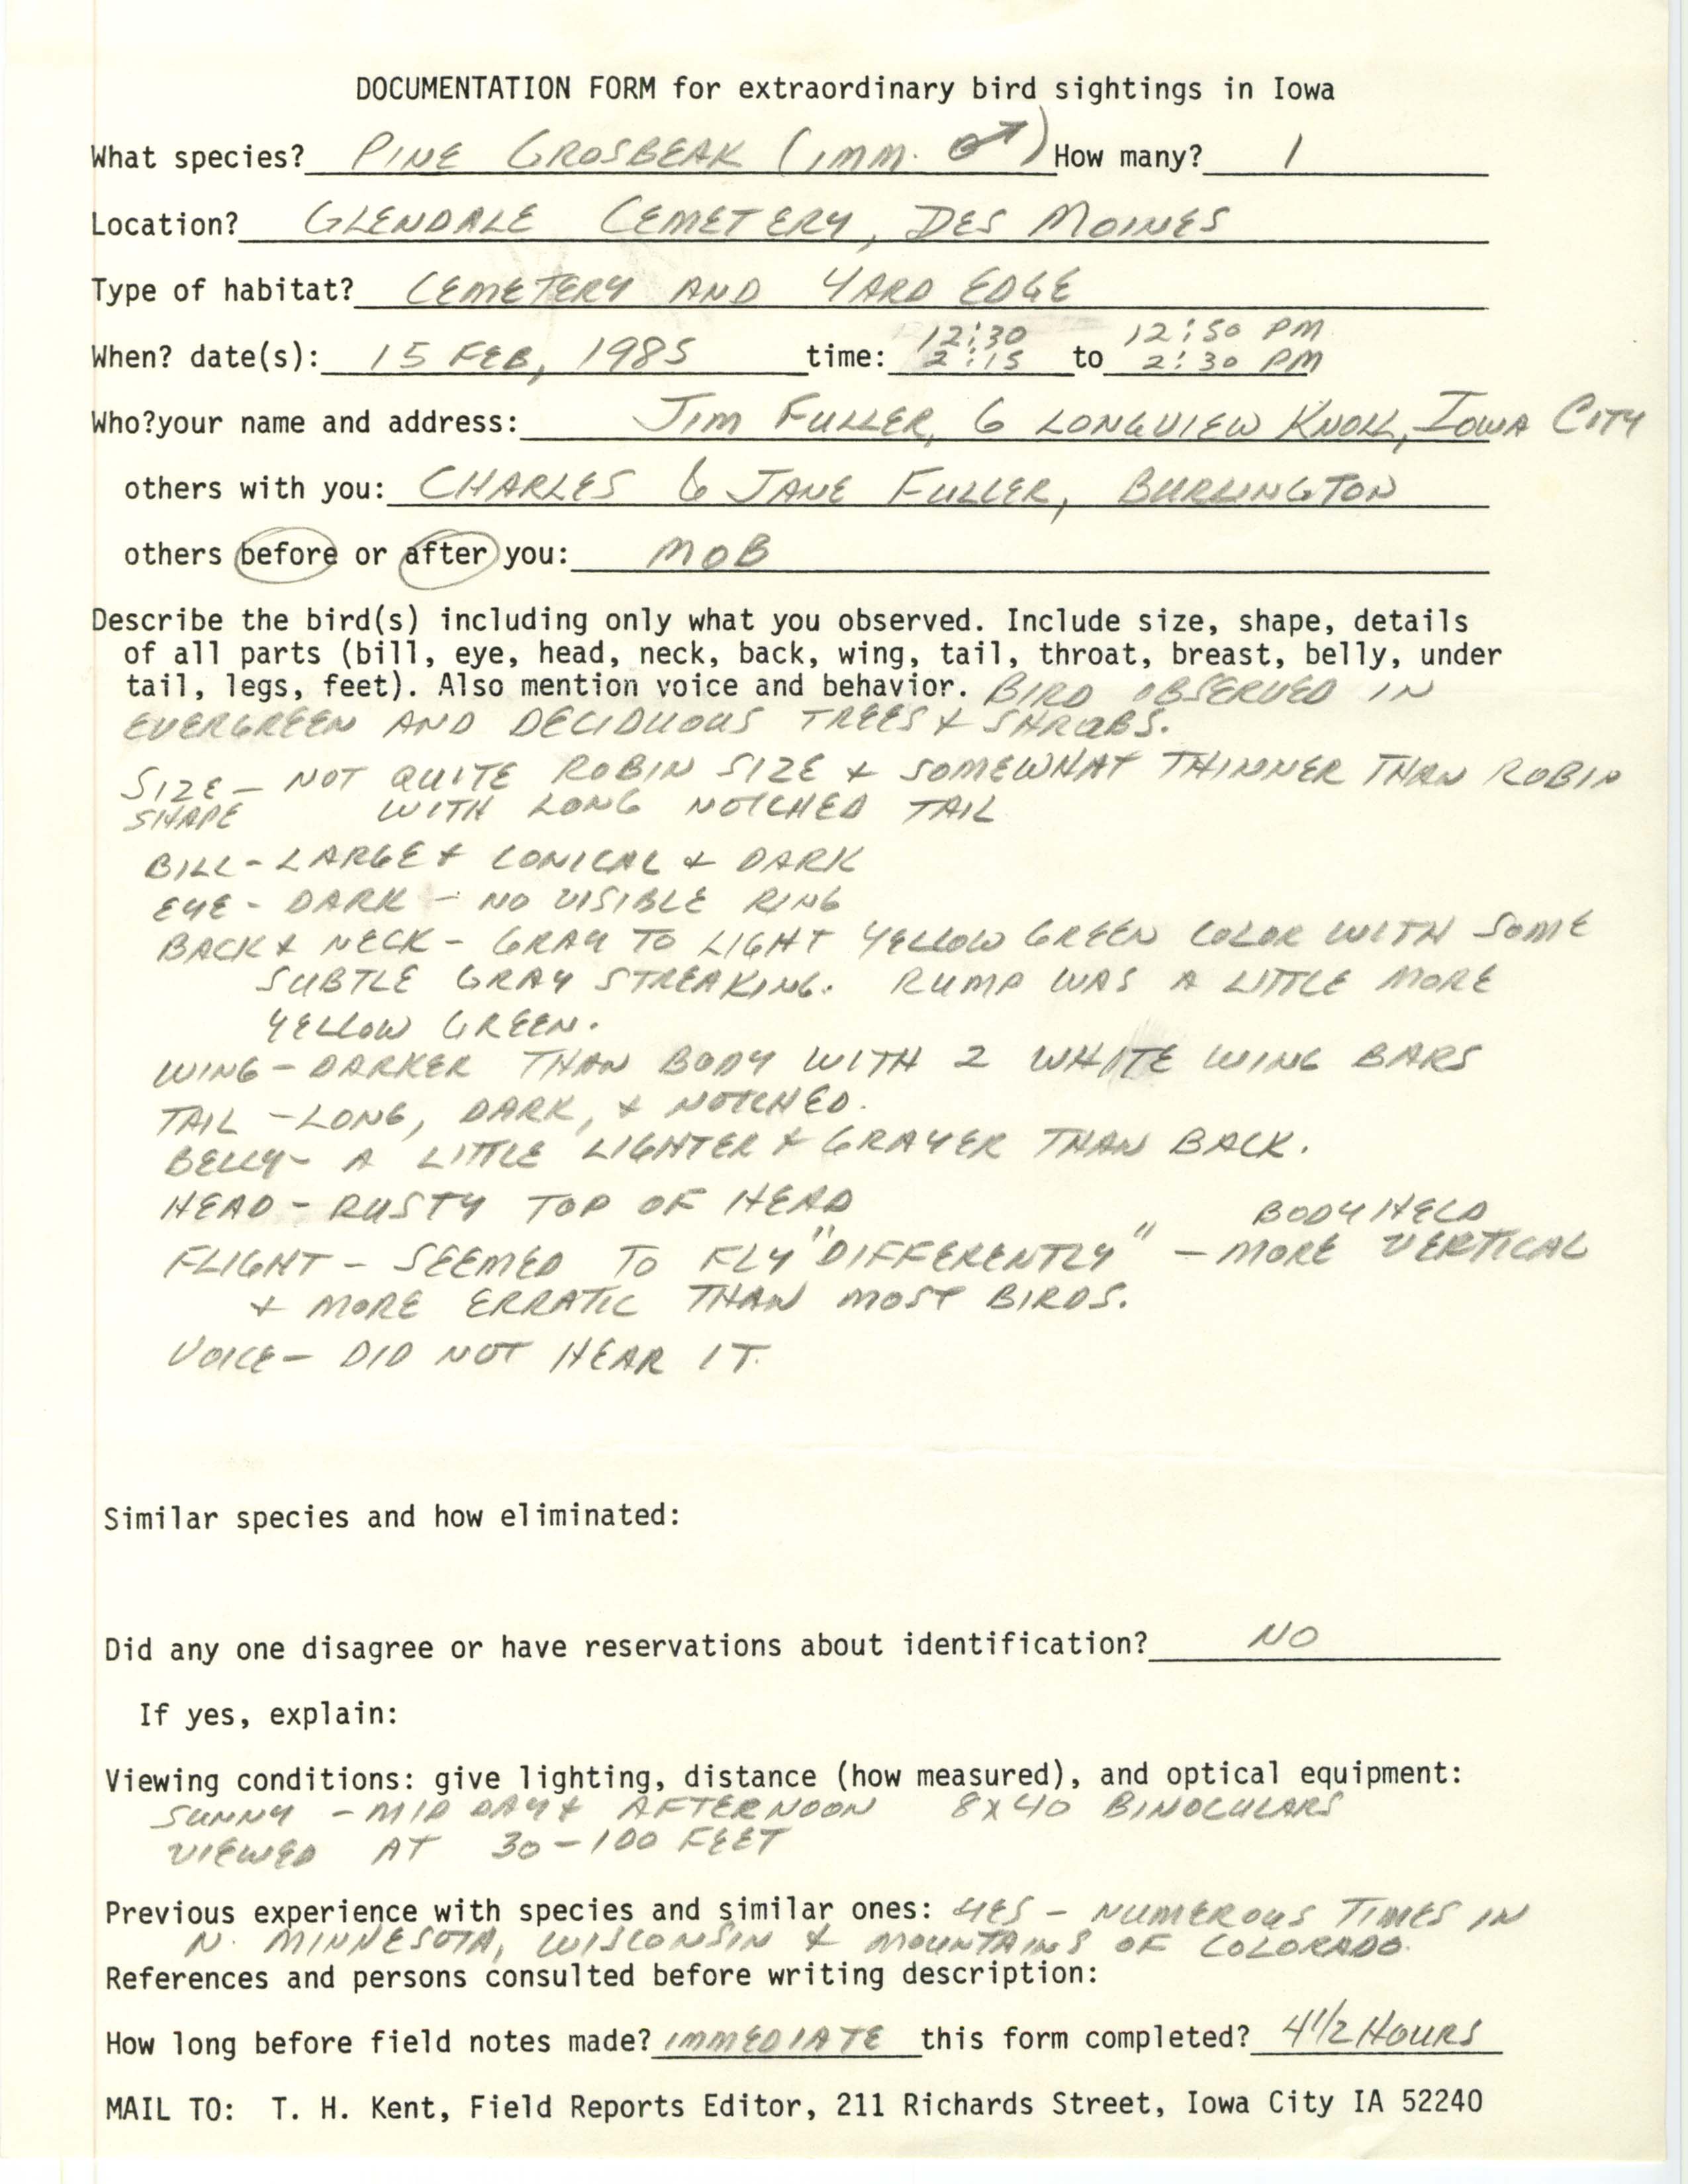 Rare bird documentation form for Pine Grosbeak at Glendale Cemetery in Des Moines, 1985